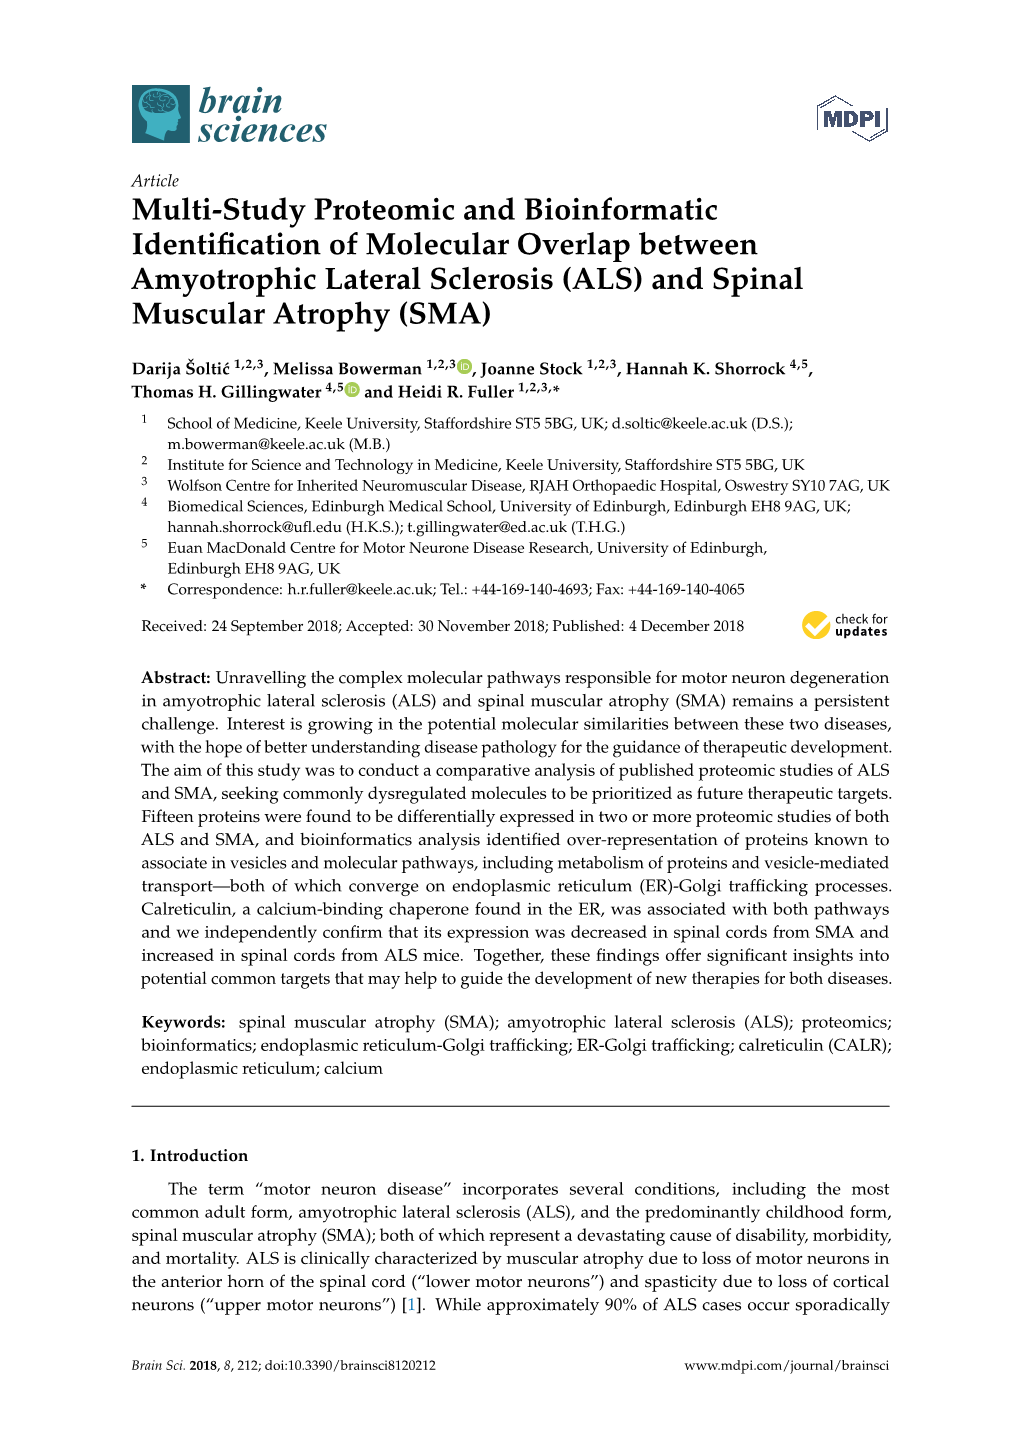 Multi-Study Proteomic and Bioinformatic Identification Of